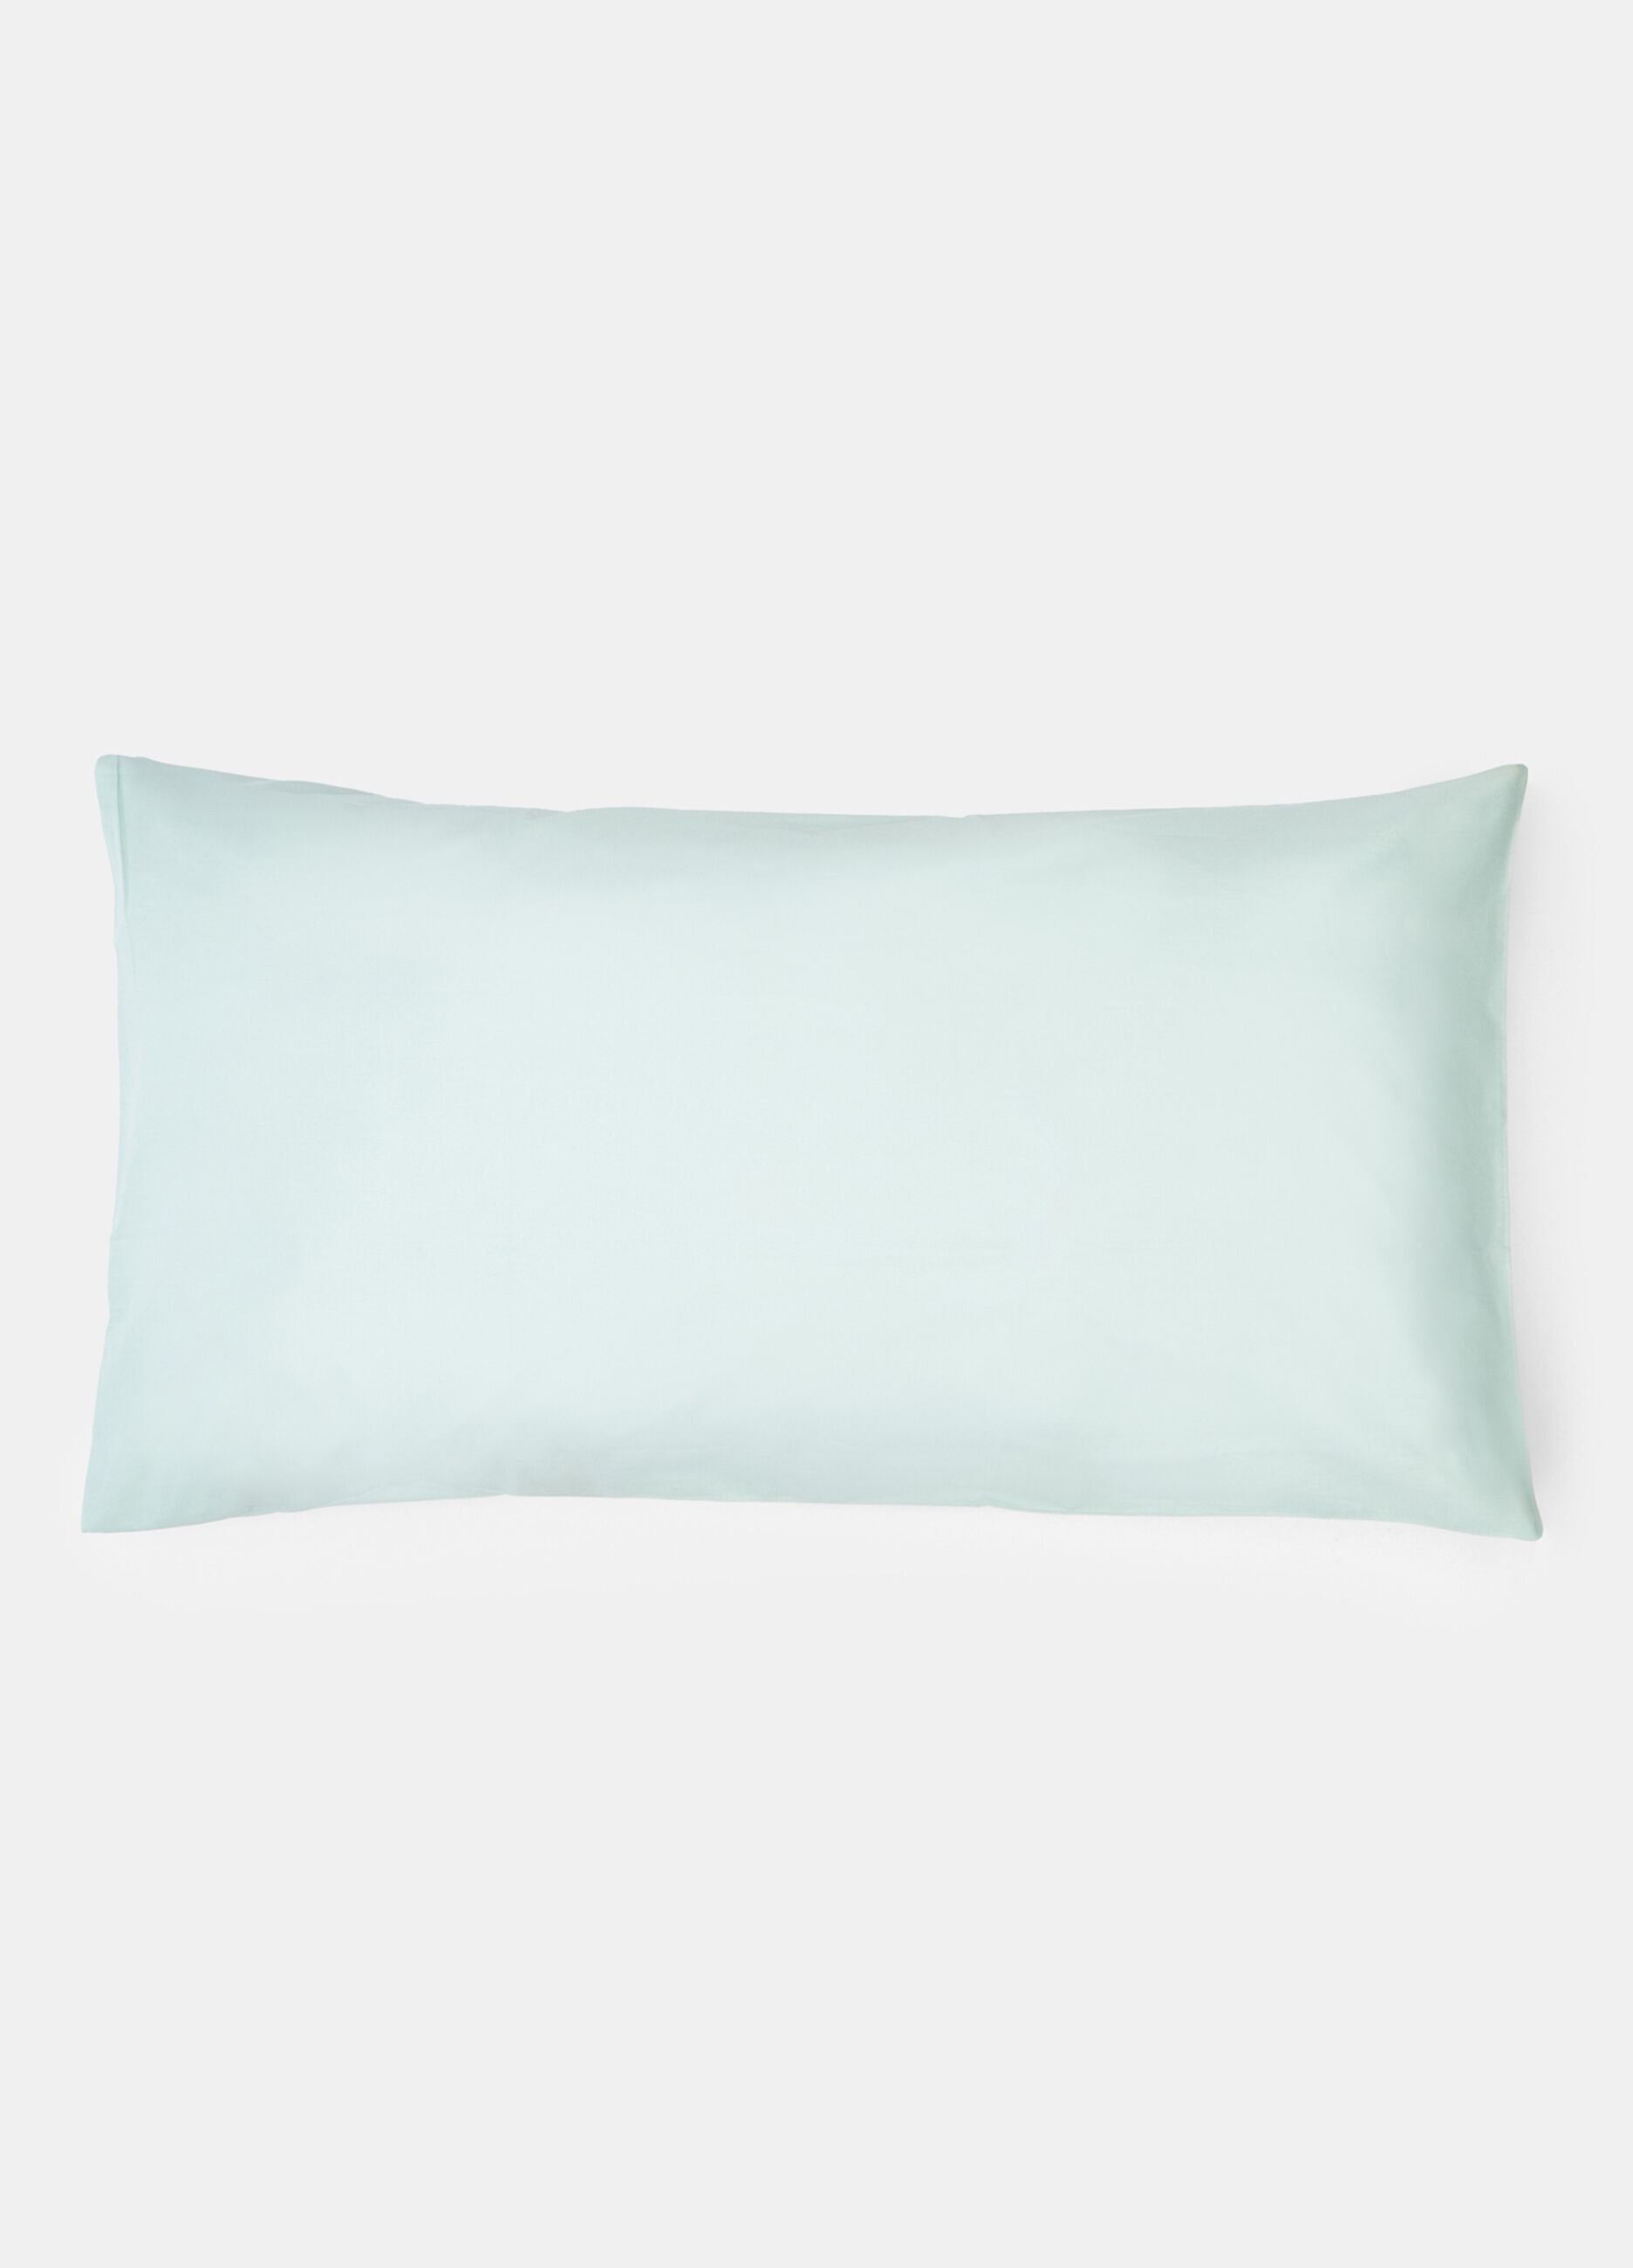 Pillowcase in cotton